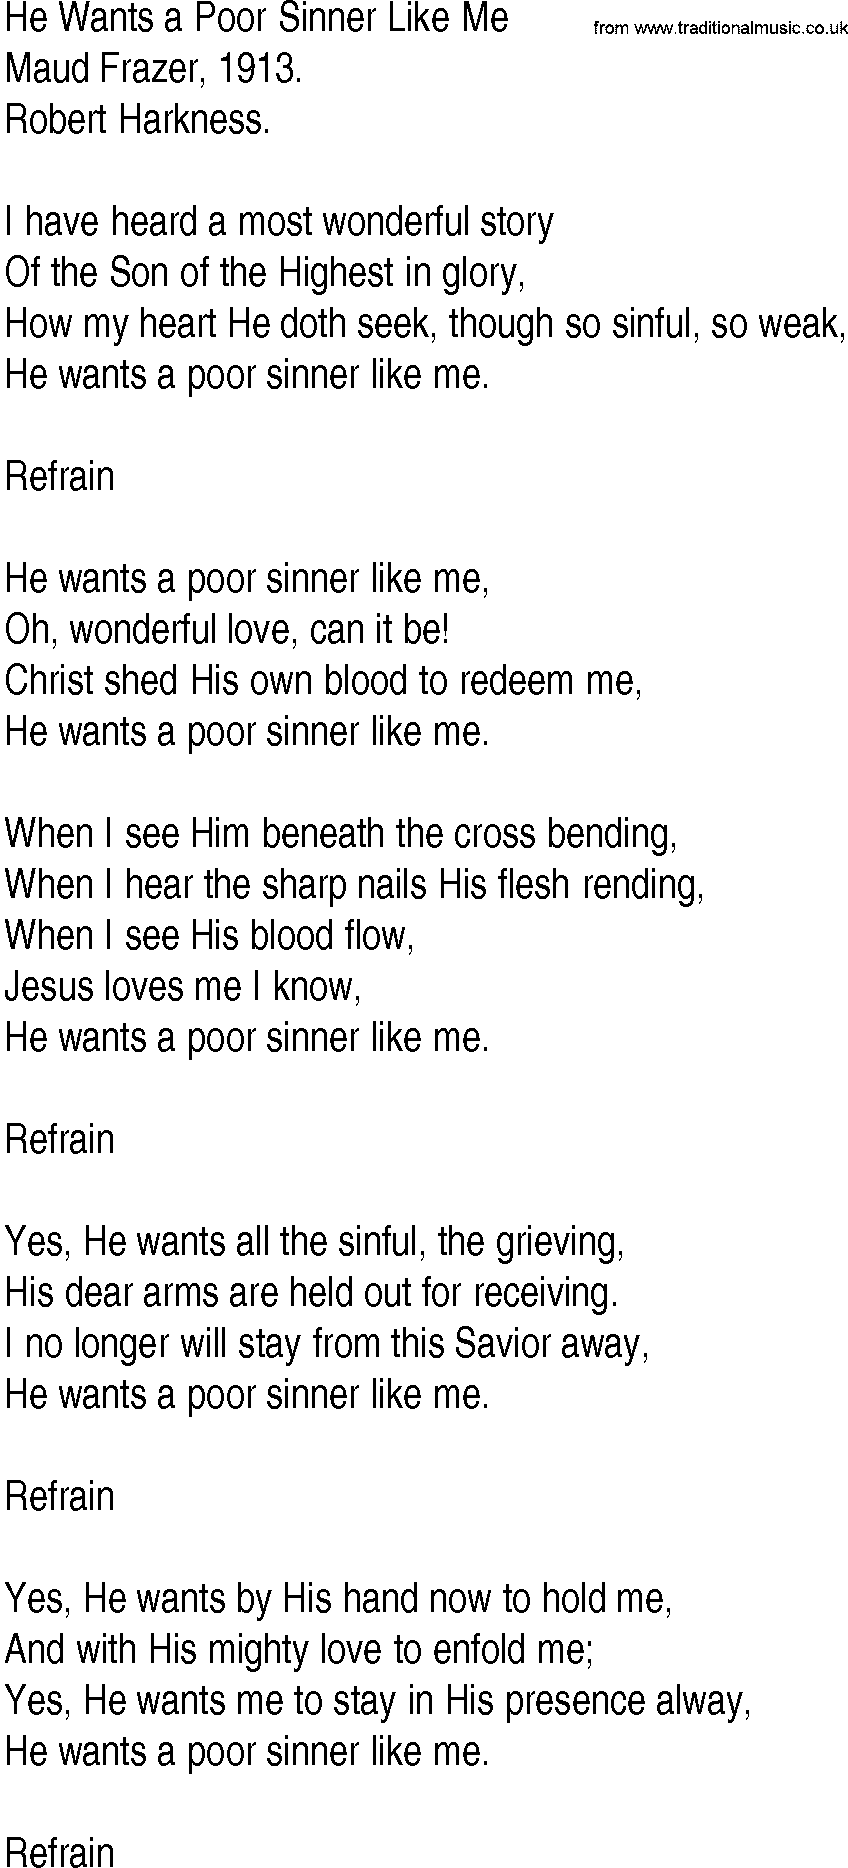 Hymn and Gospel Song: He Wants a Poor Sinner Like Me by Maud Frazer lyrics